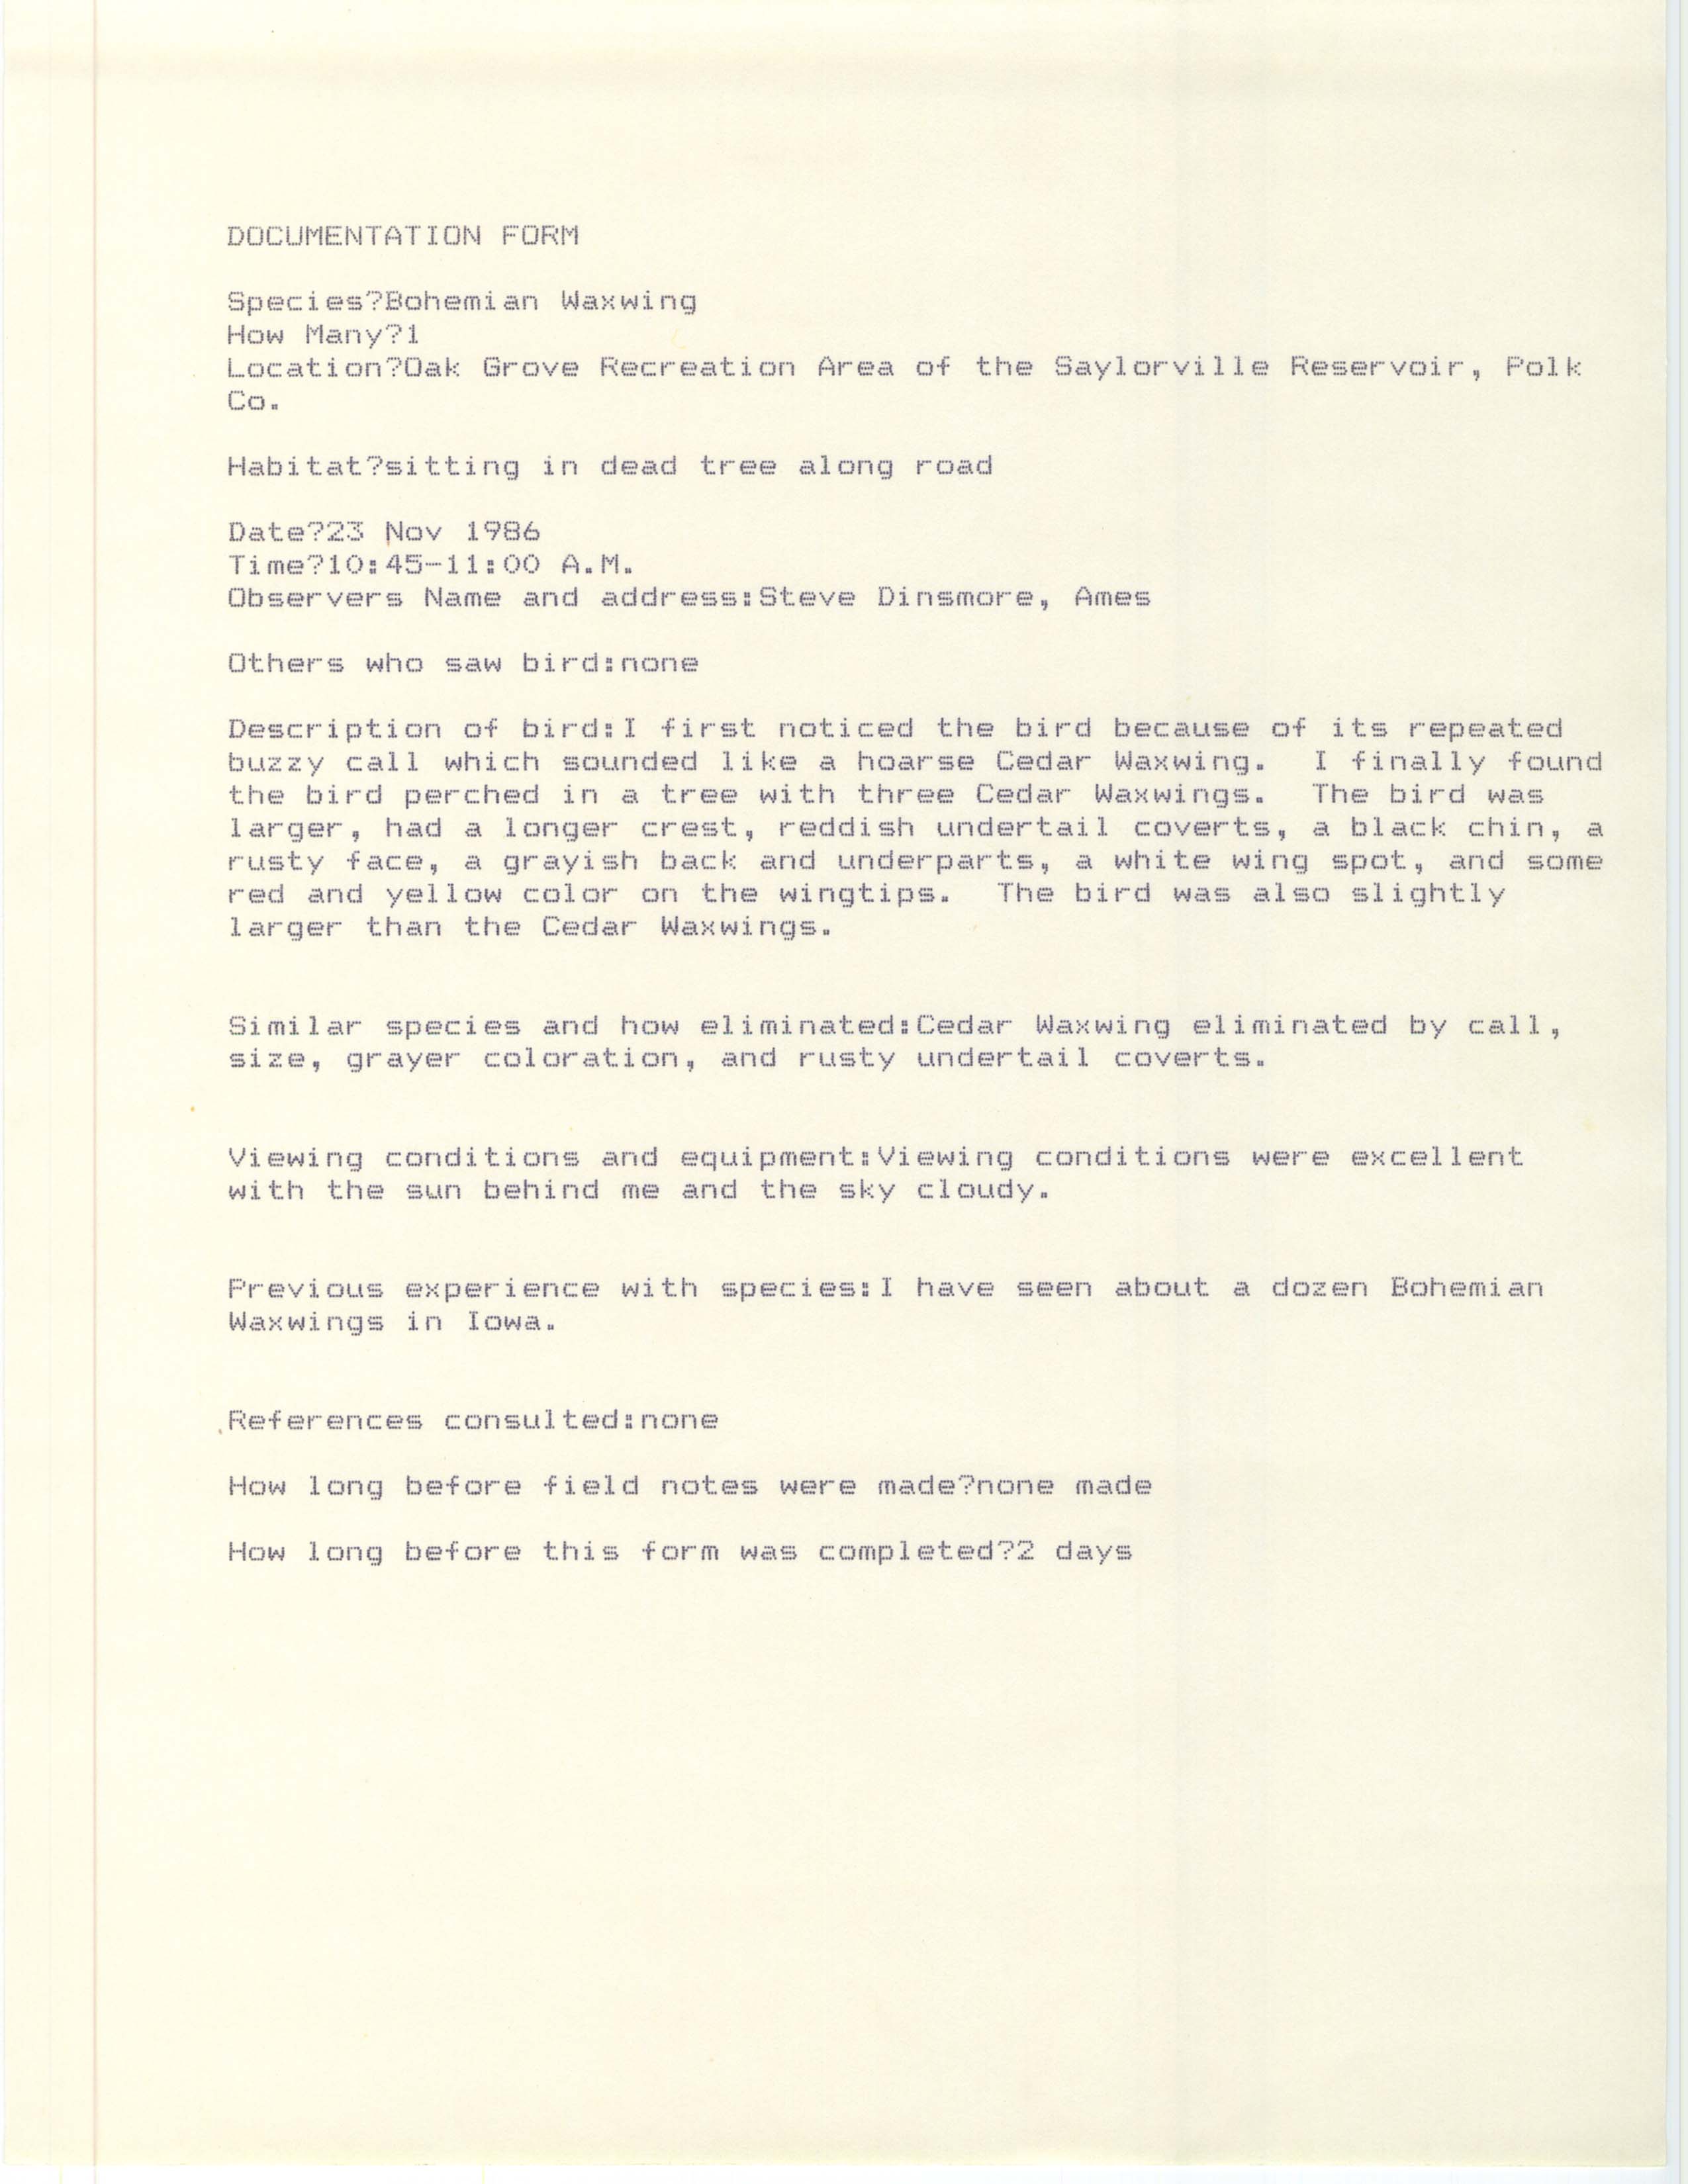 Rare bird documentation form for Bohemian Waxwing at Oak Grove Recreation Area at Saylorville Reservoir, 1986